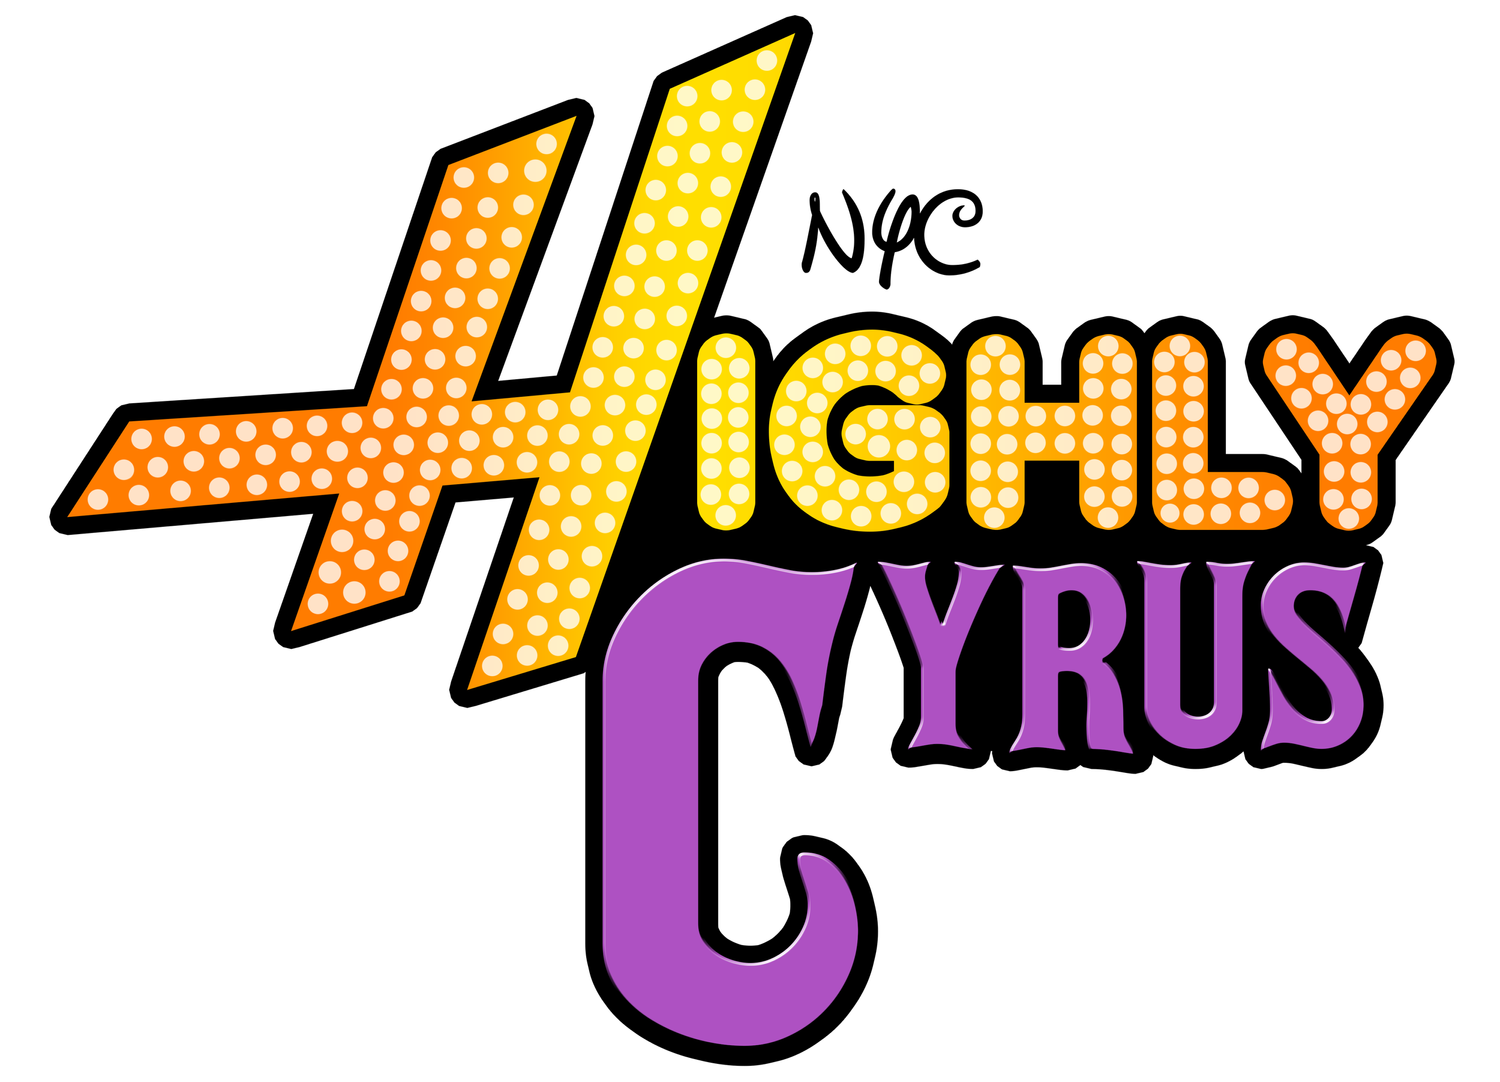 Highly Cyrus